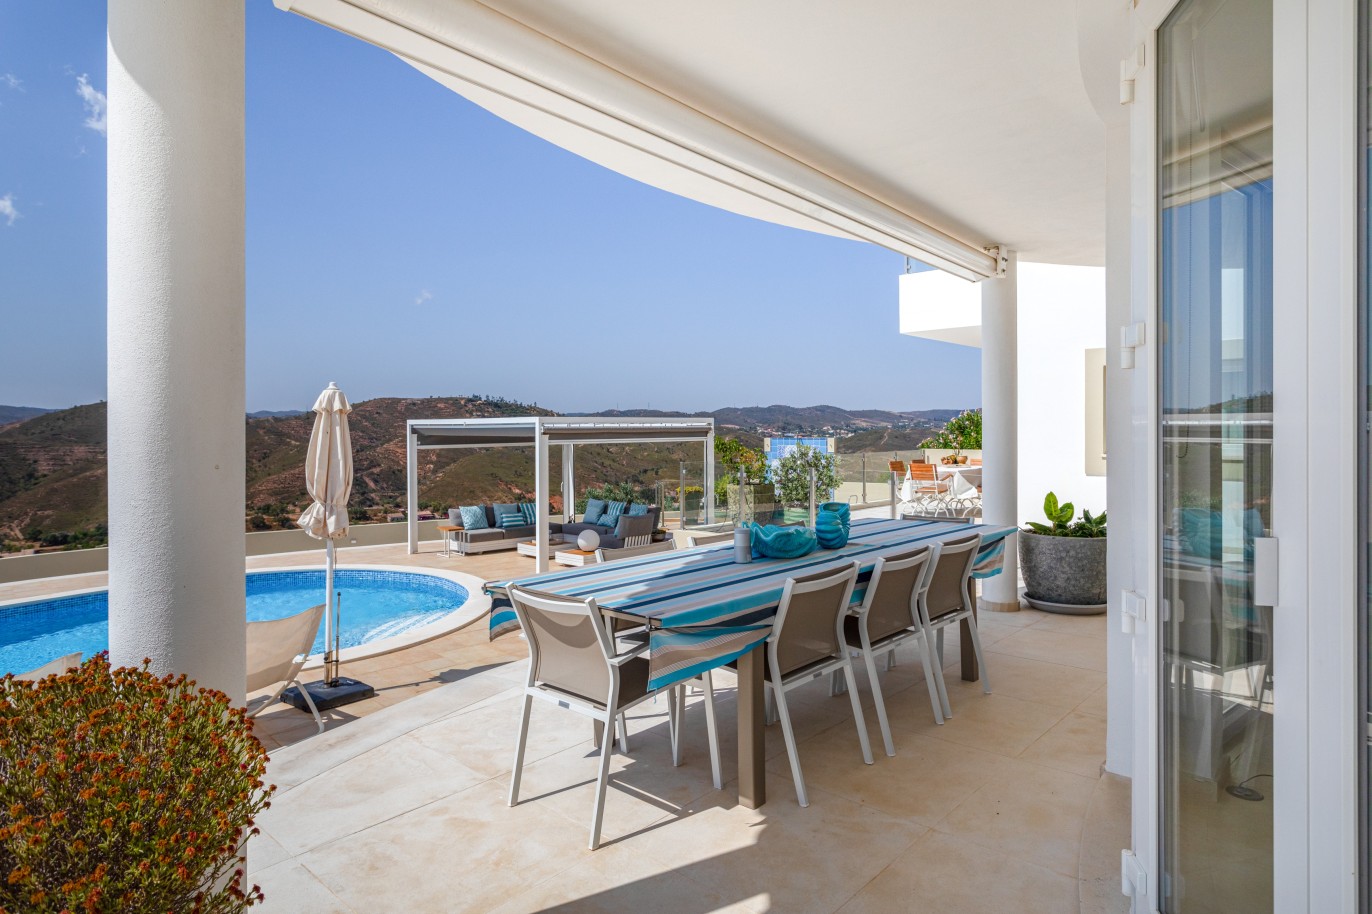 4 Bedroom Luxury Villa with pool for sale in Silves, Algarve_227365